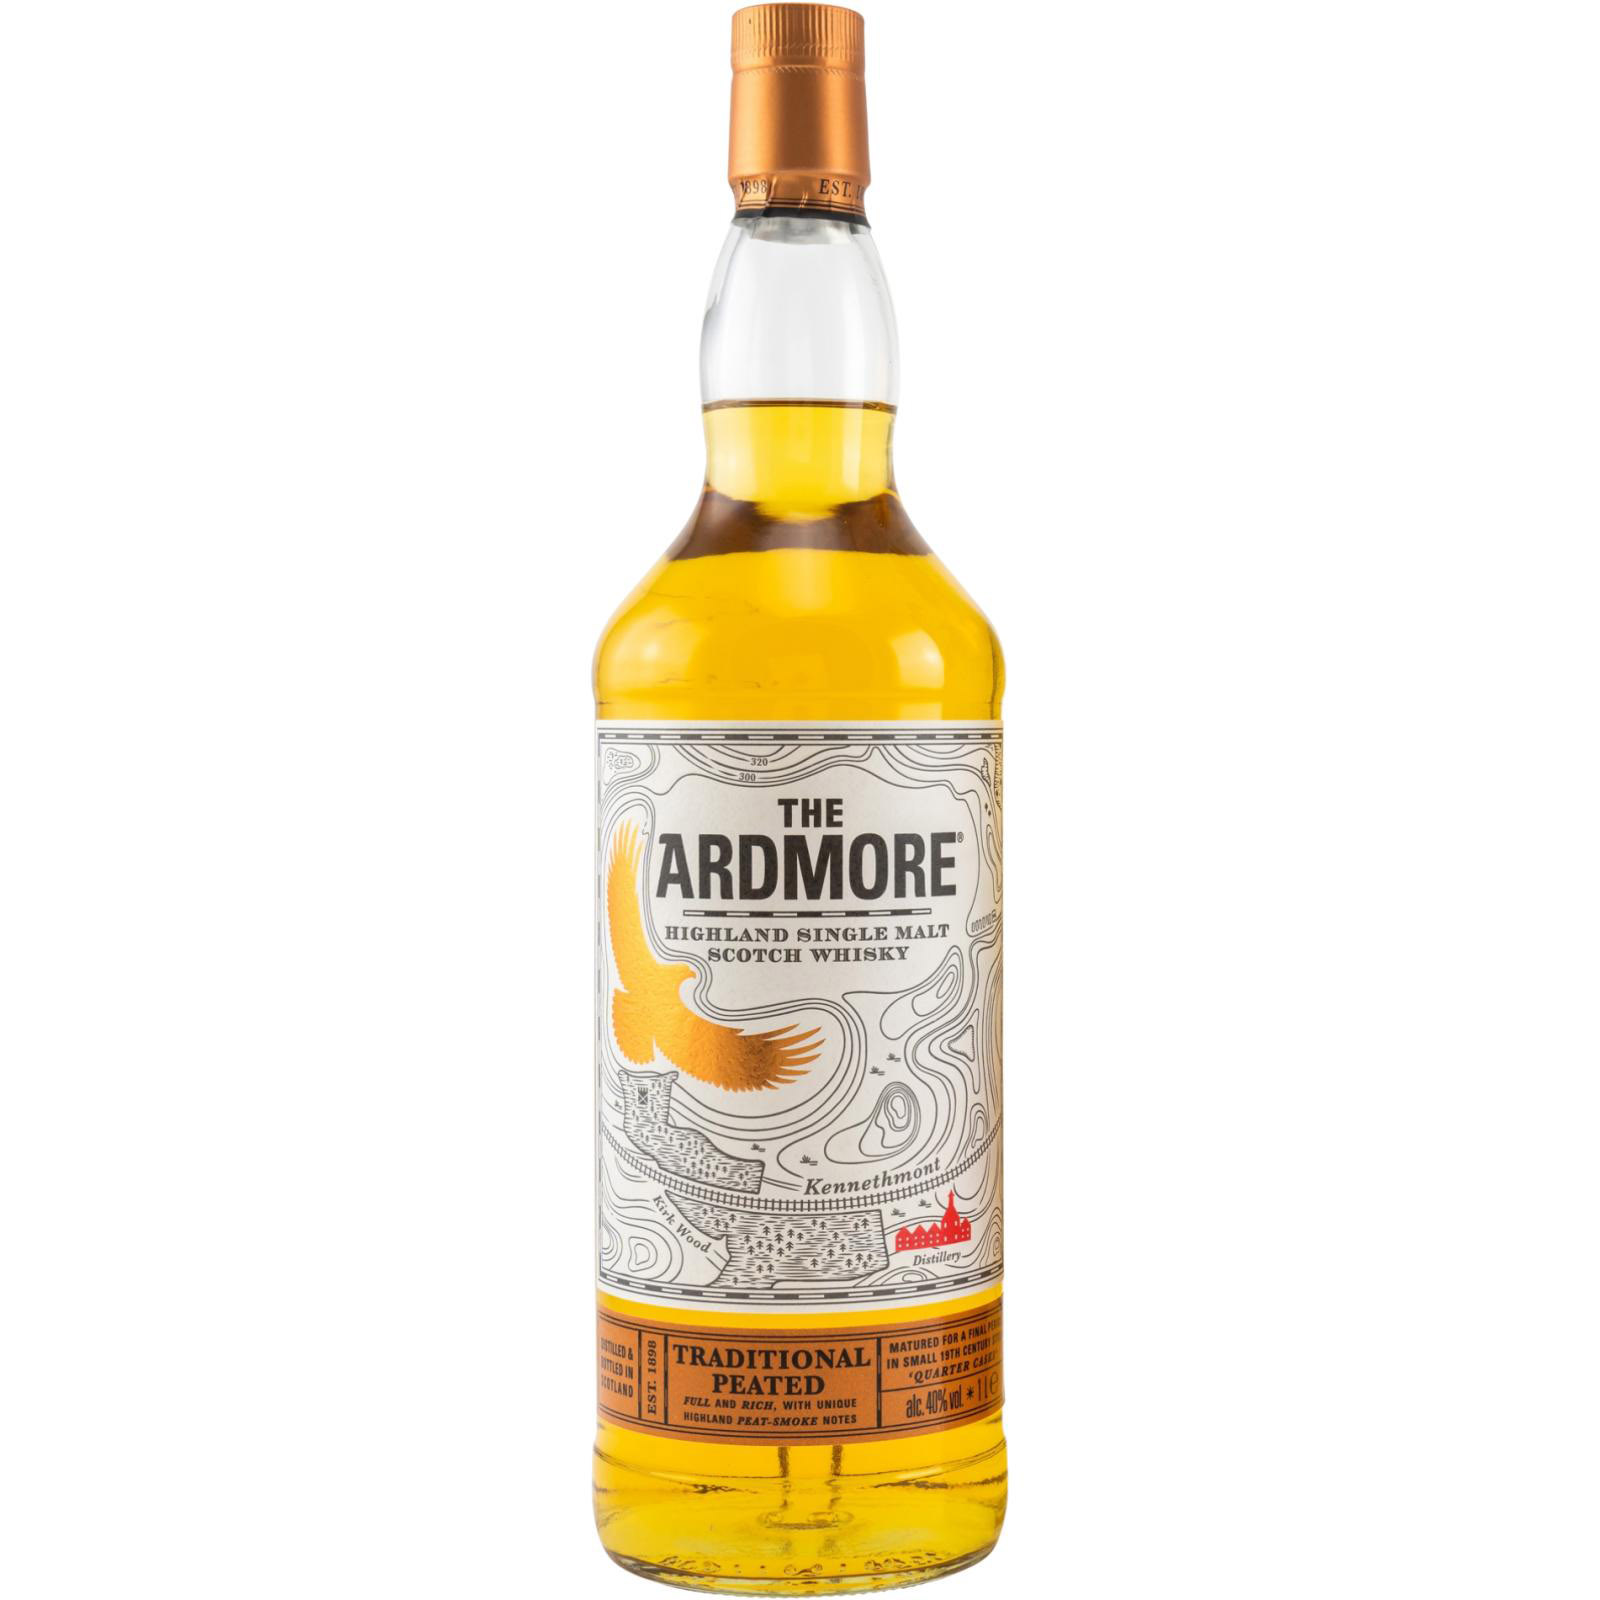 Віскі The Ardmore Traditional Peated Highland Single Malt Scotch Whisky 40% 1 л - фото 1